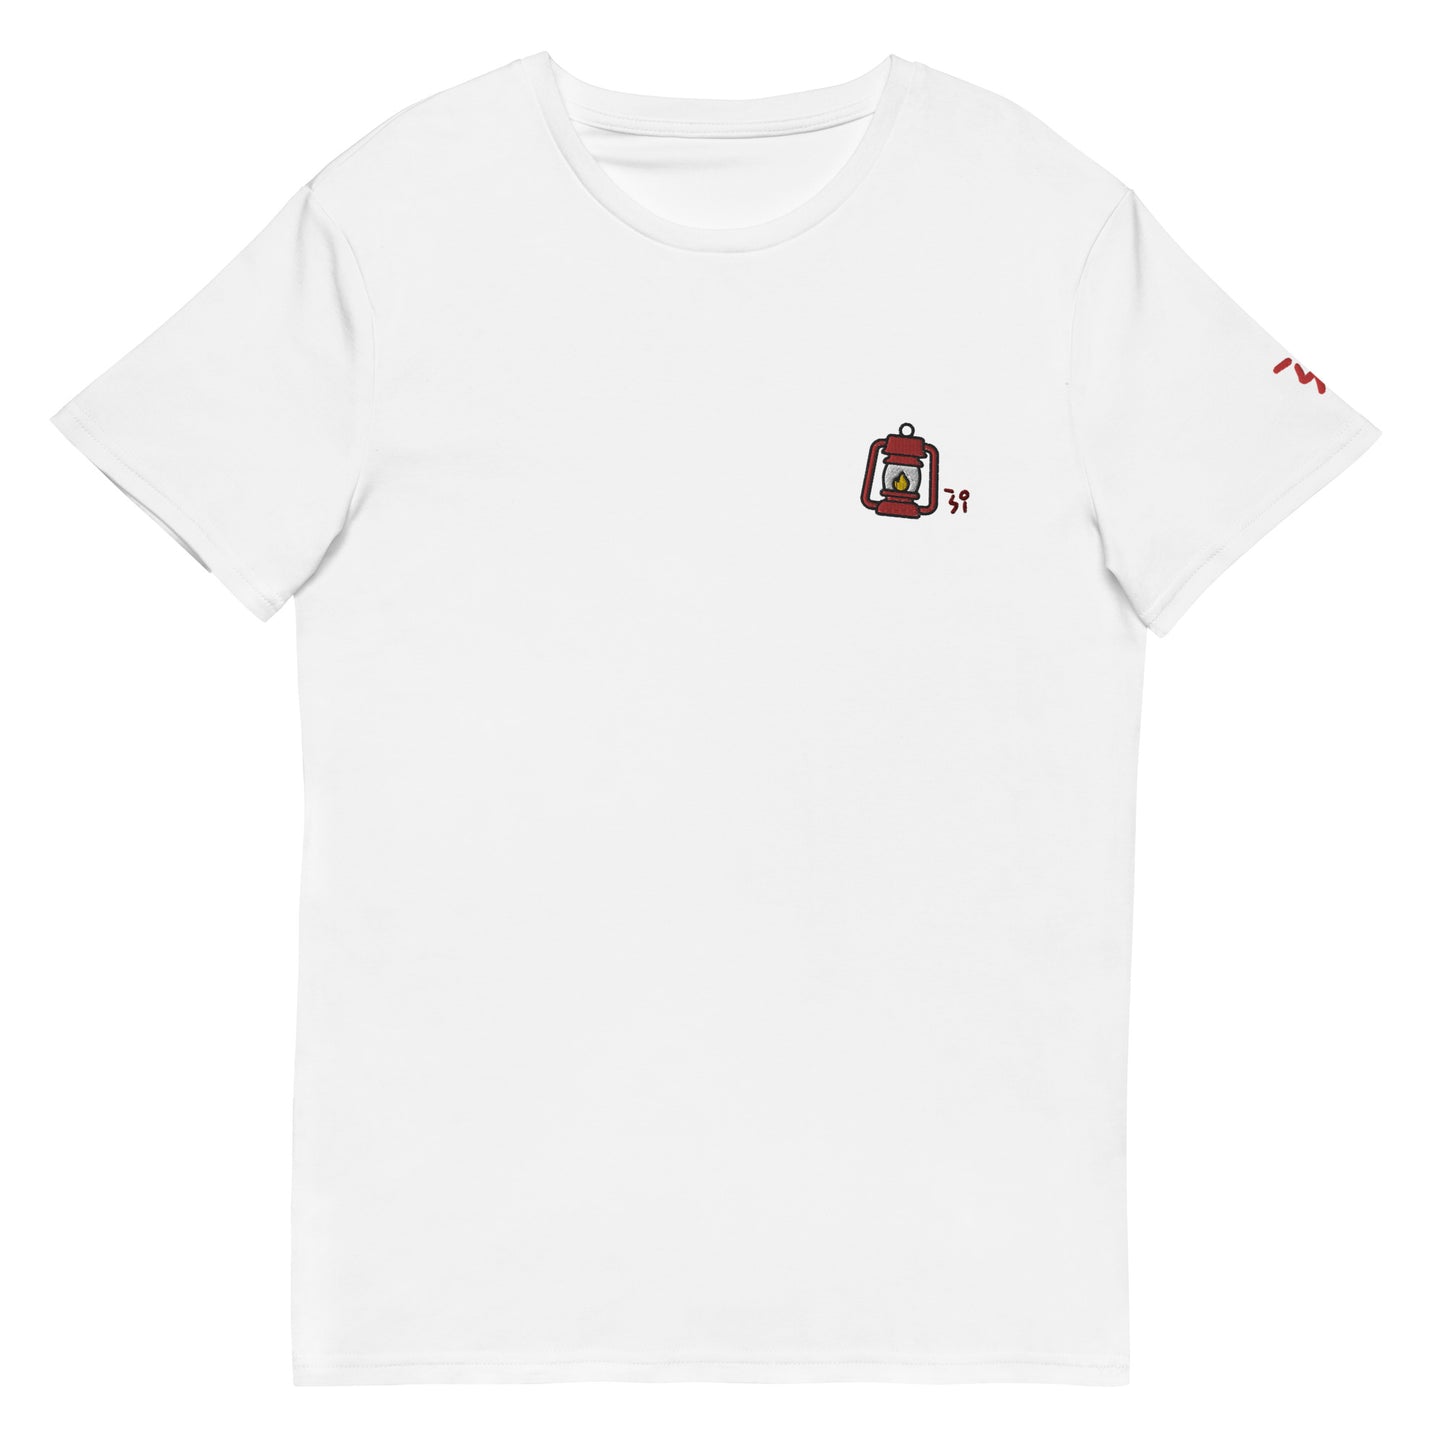 Camp lantern Men's premium cotton t-shirt